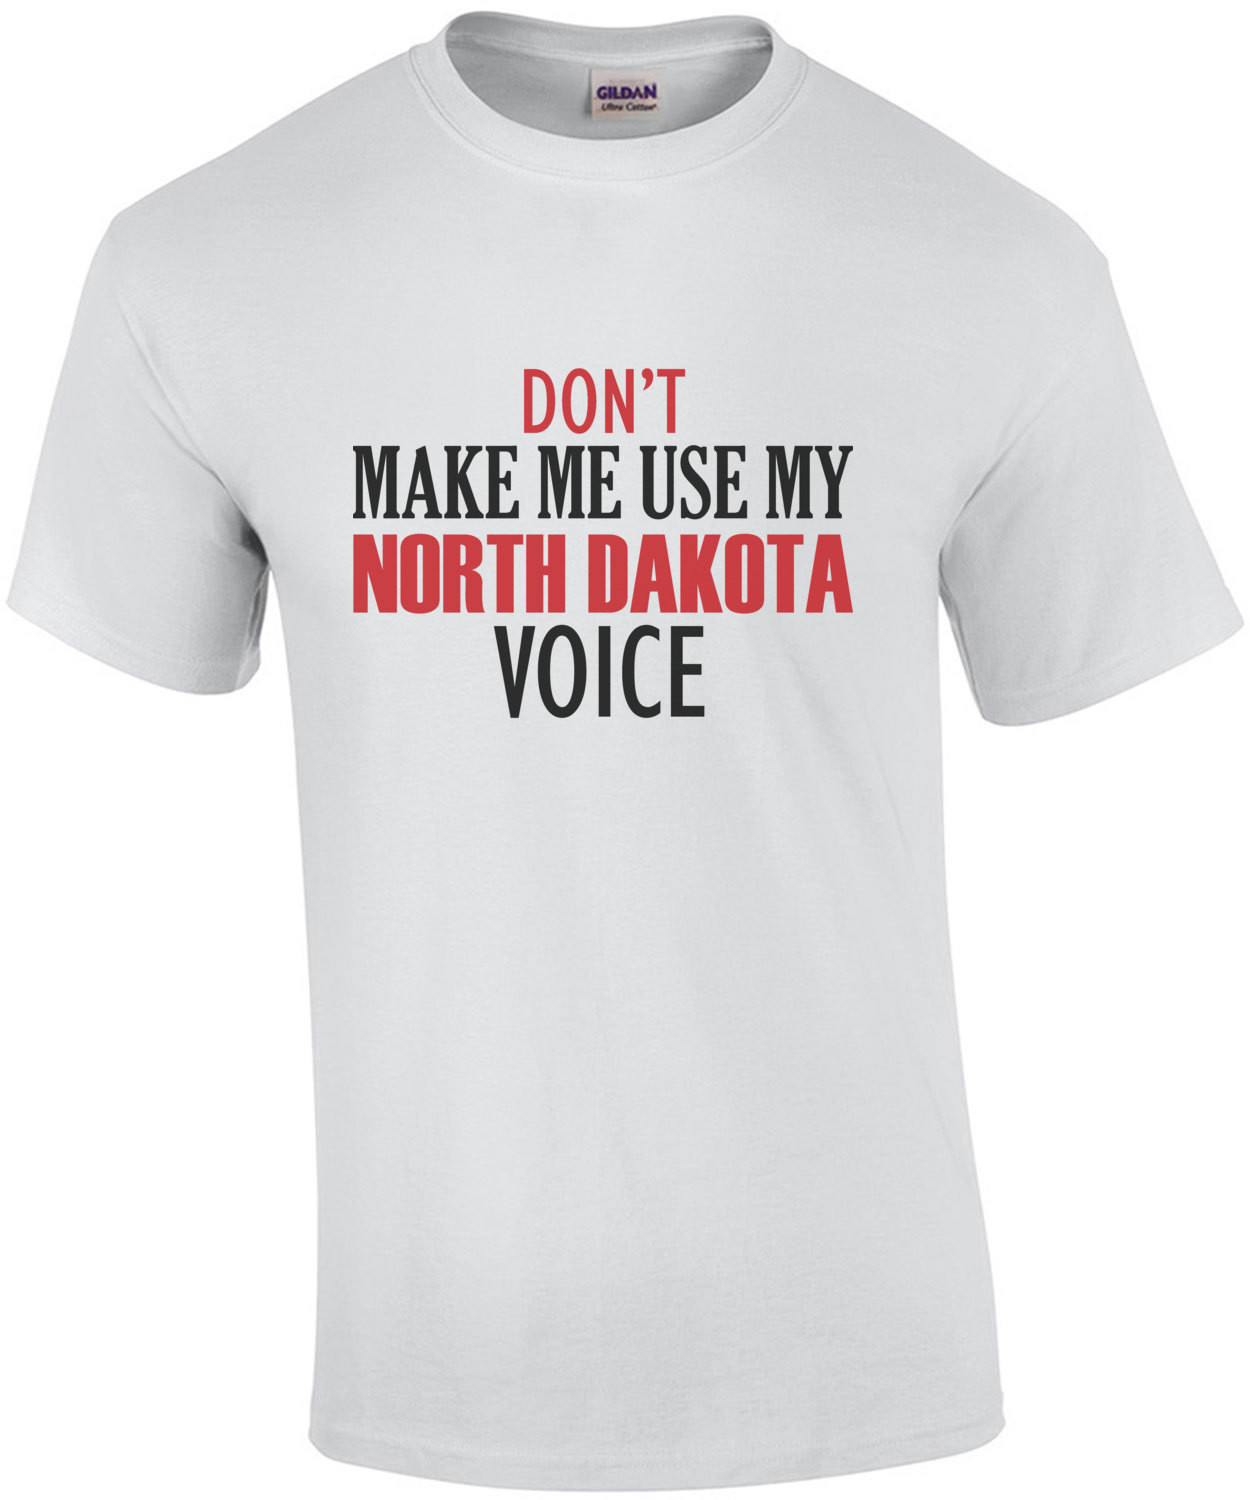 Don't make me use my North Dakota voice - North Dakota T-Shirt